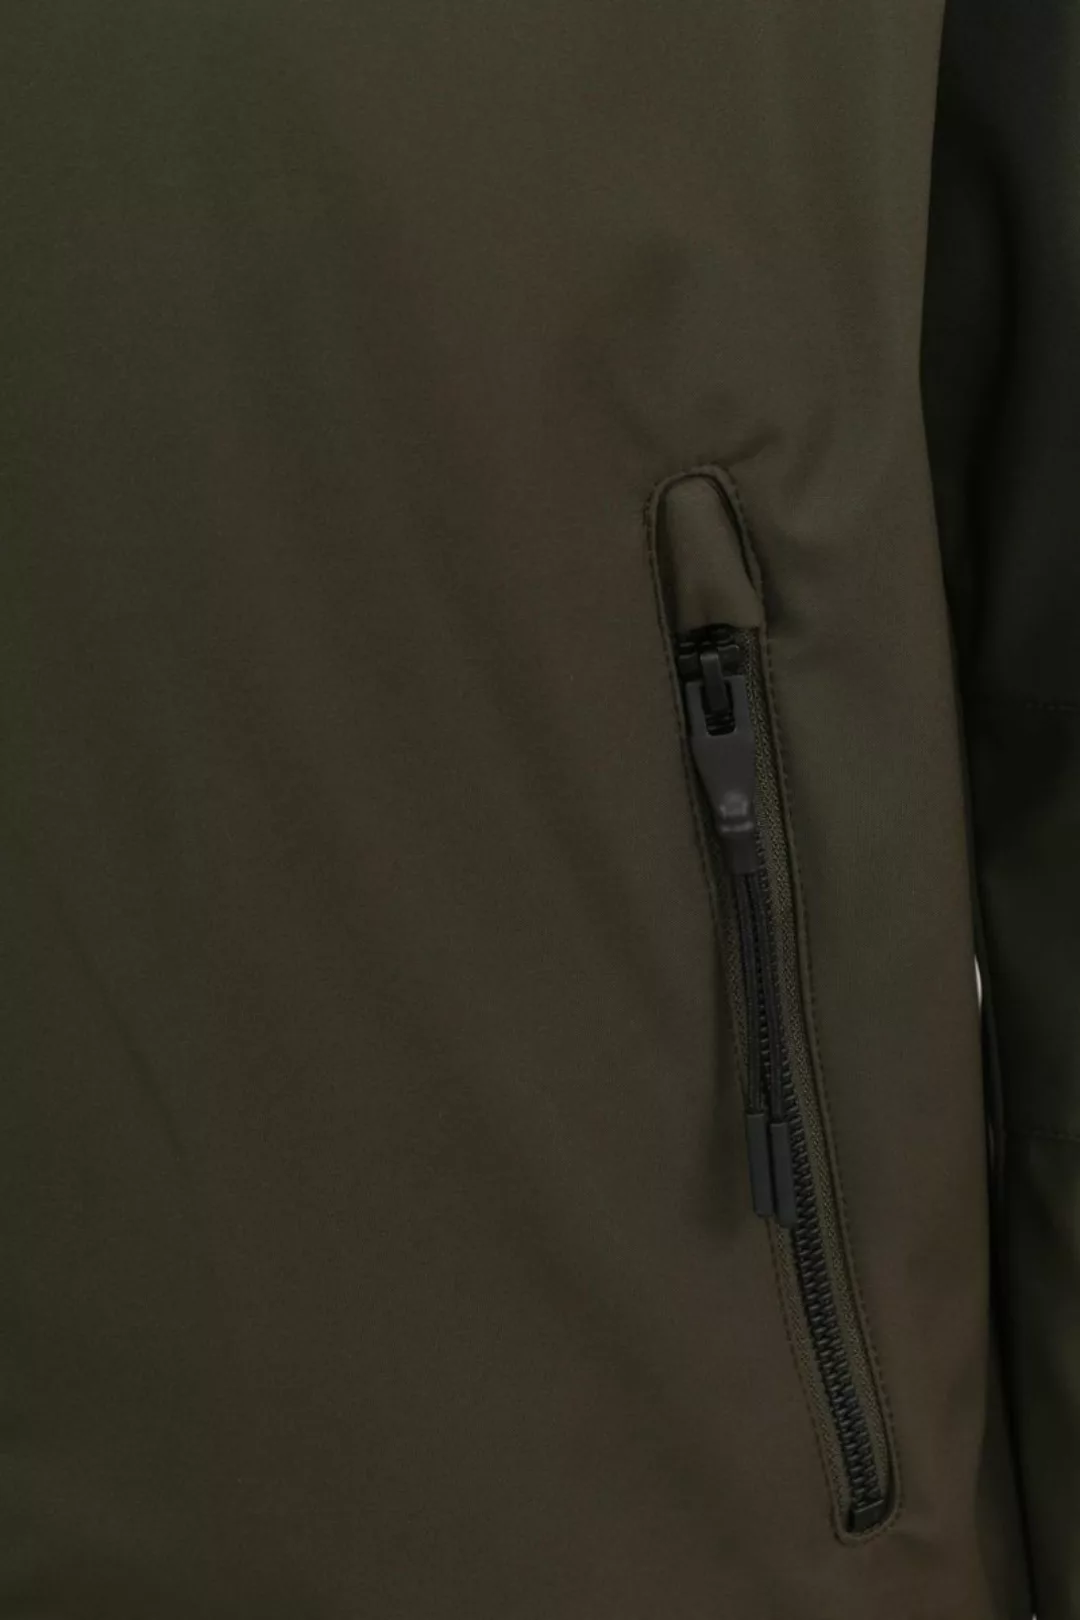 Reset Kingston Softshell Jacke Dunkelgrün - Größe XL günstig online kaufen